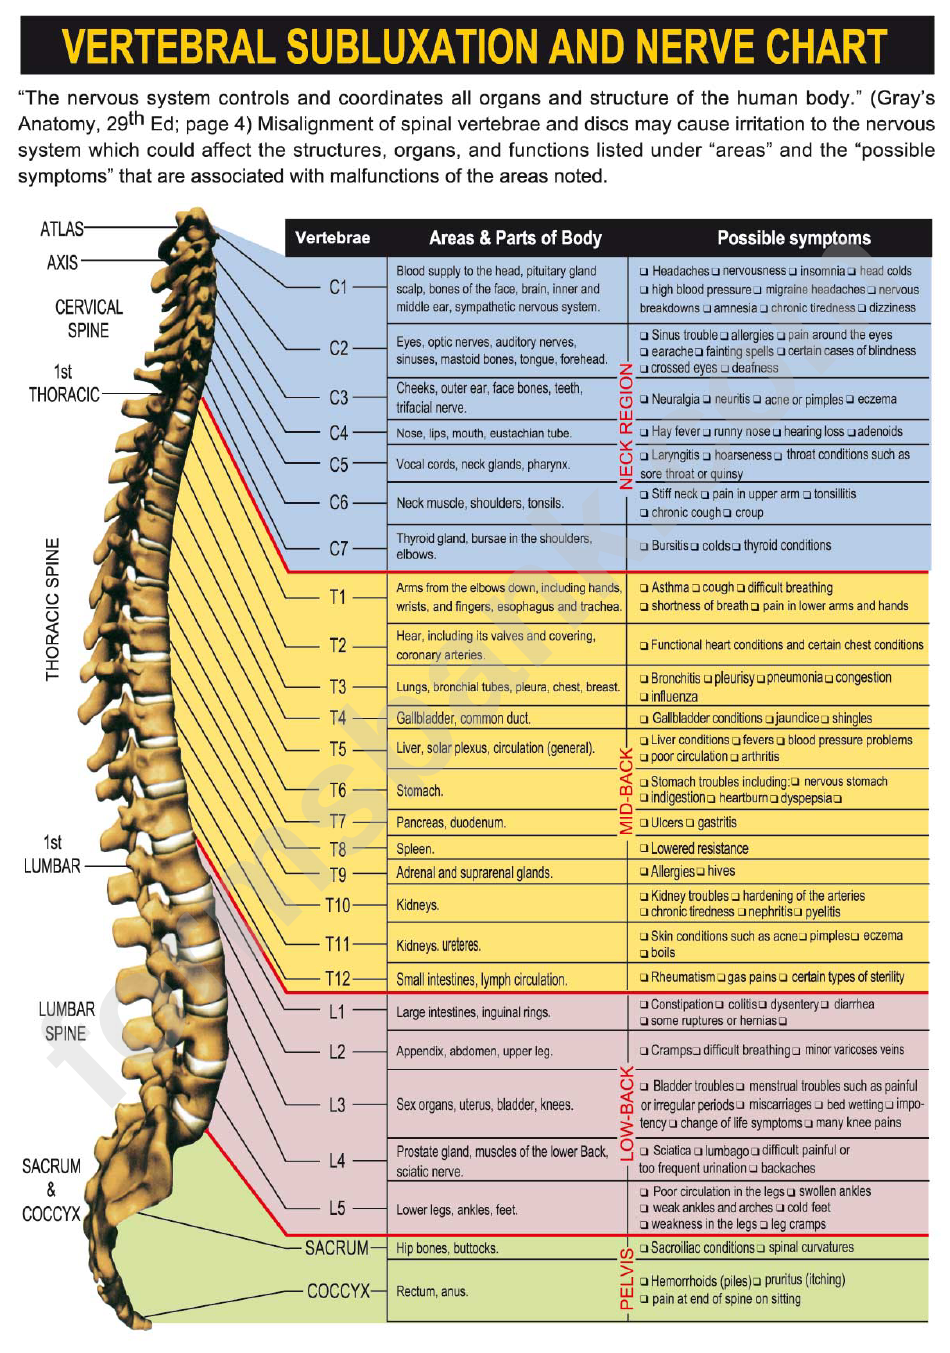 vertebral-subluxation-and-nerve-chart-printable-pdf-download